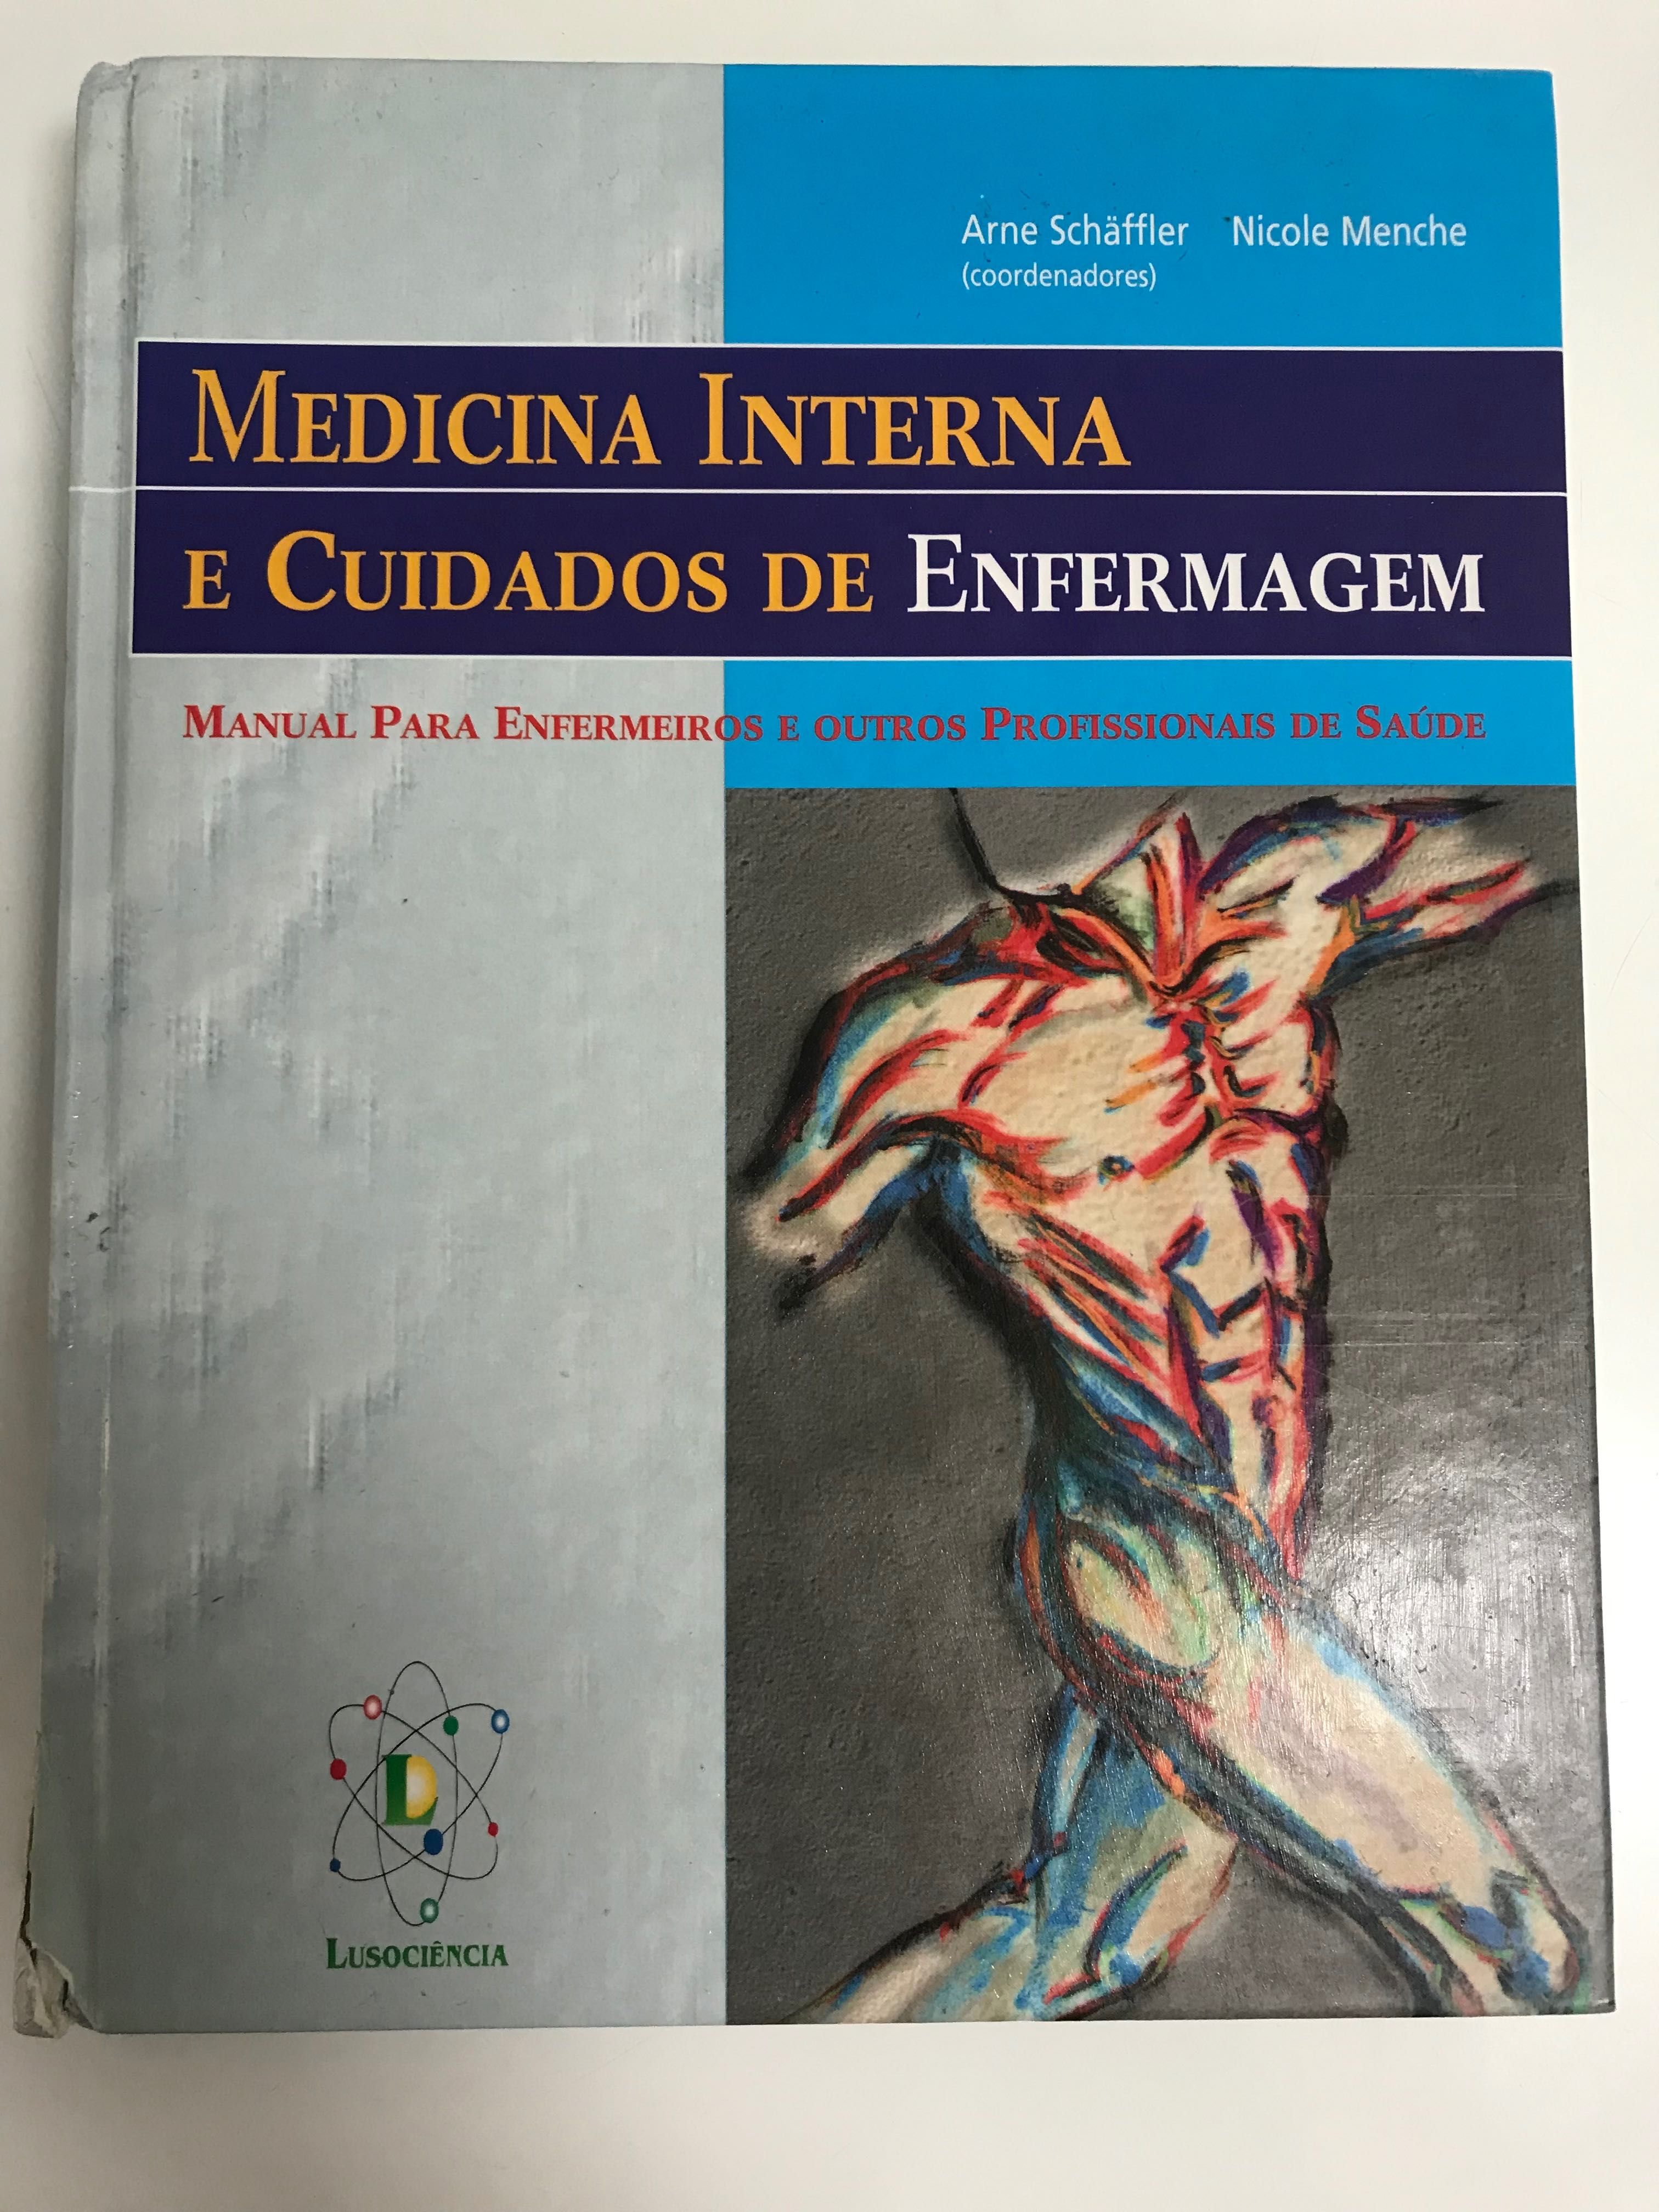 Medicina interna e cuidados de enfermagem 2004